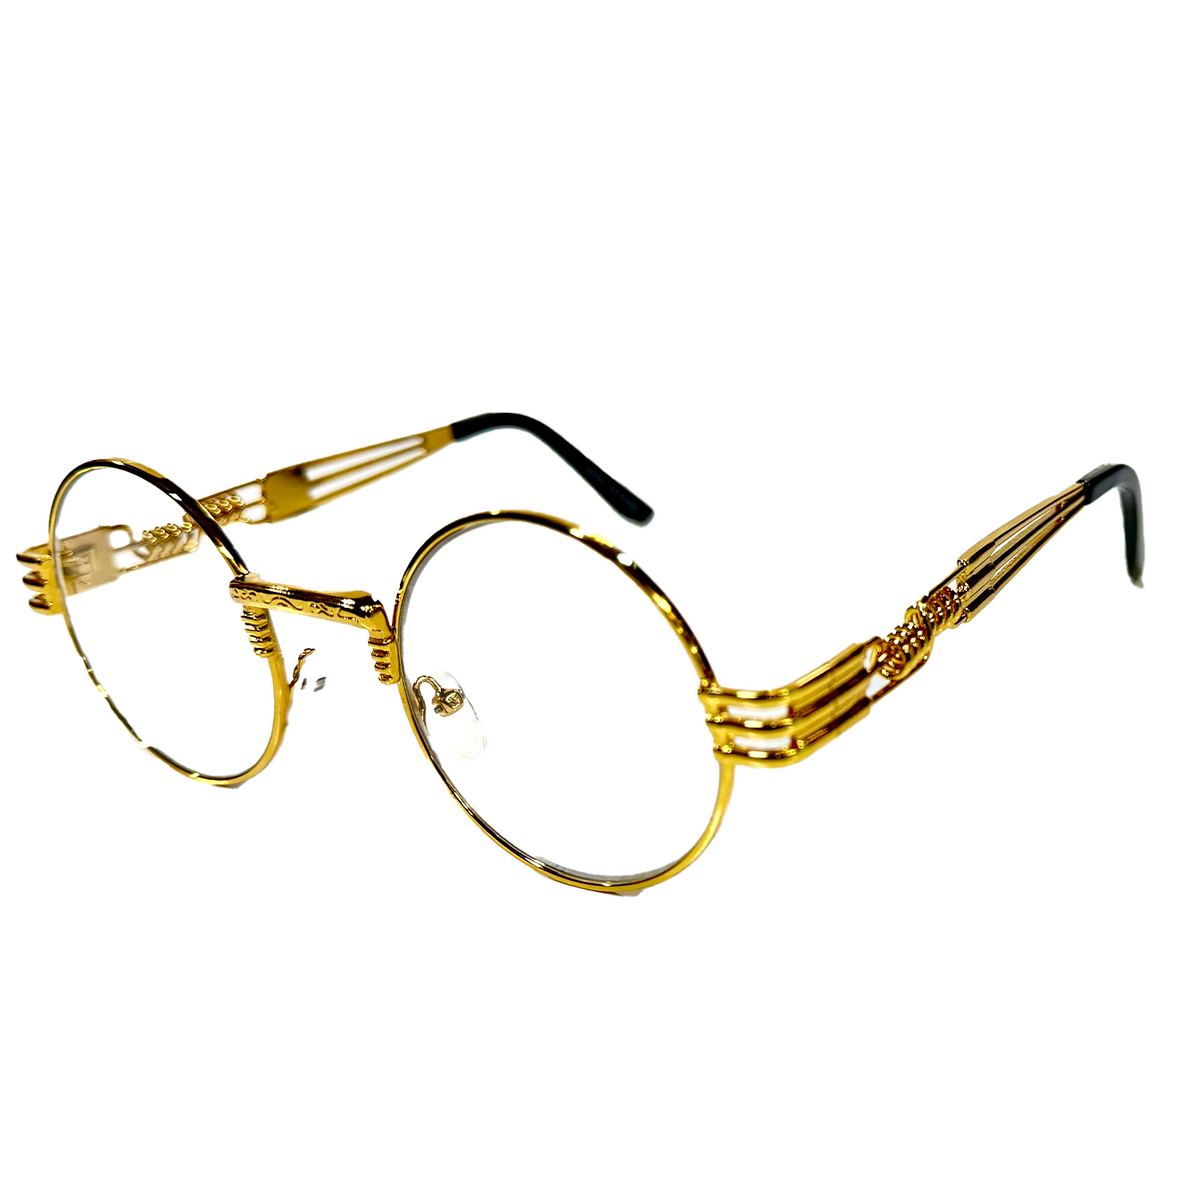 Gold Funky Frames Clear Lens Glasses